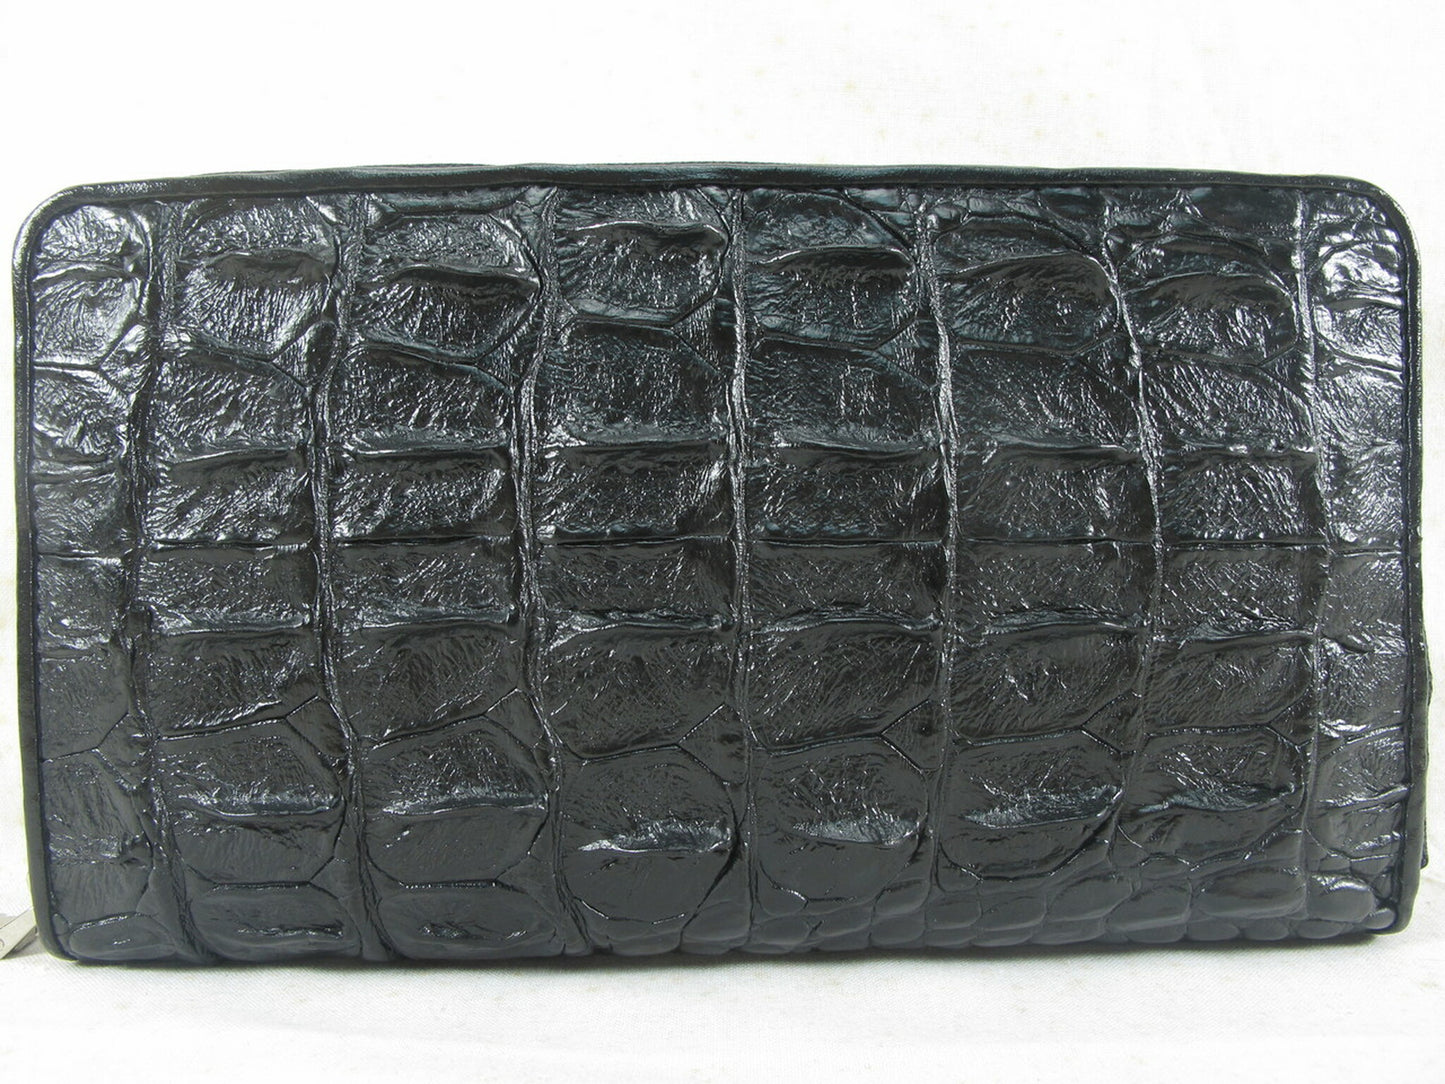 Genuine Crocodile Backbone Skin Leather Large Zip Around Clutch Wallet Purse